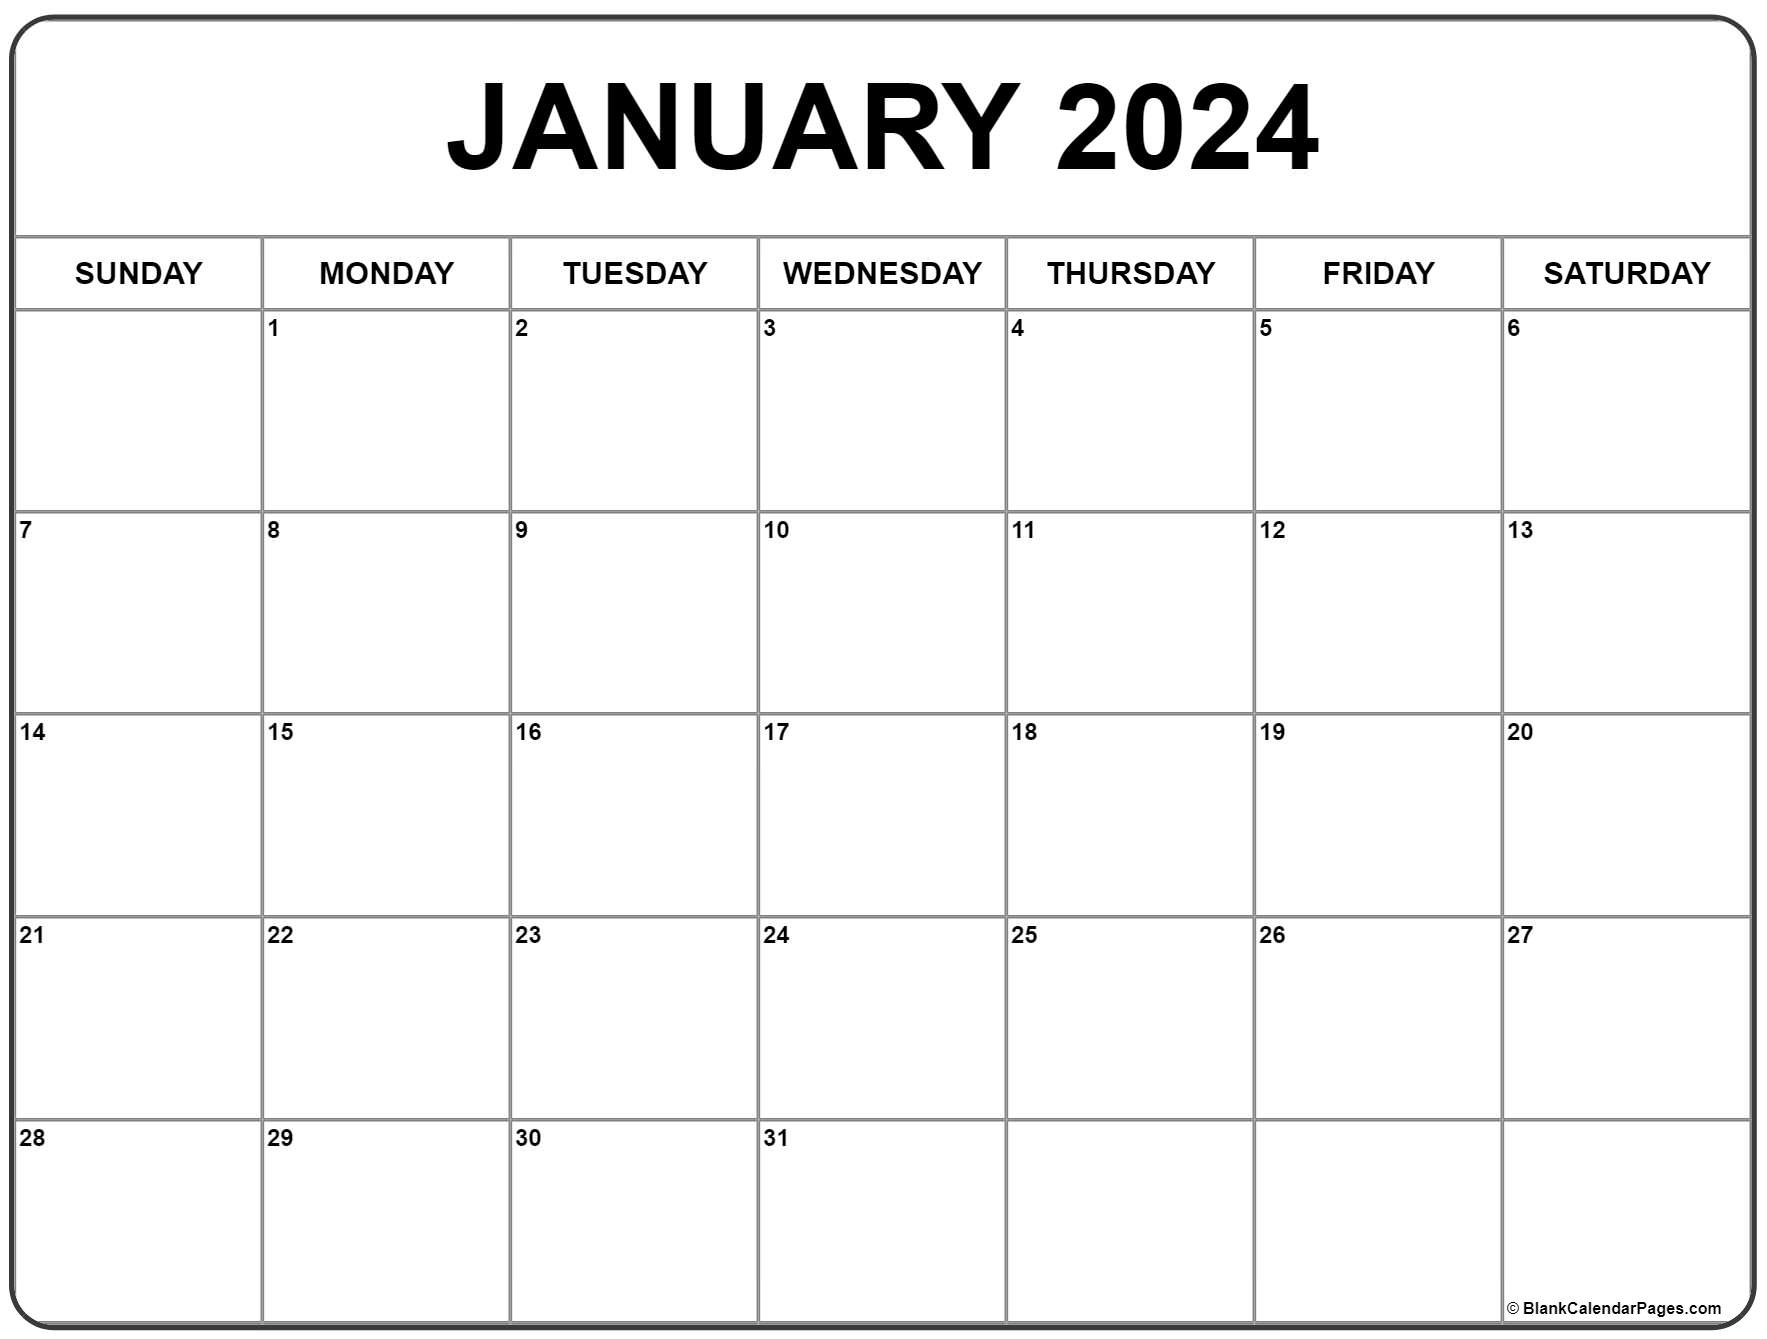 January 2024 Calendar | Free Printable Calendar for Free Printable 2024 Calendar By Month